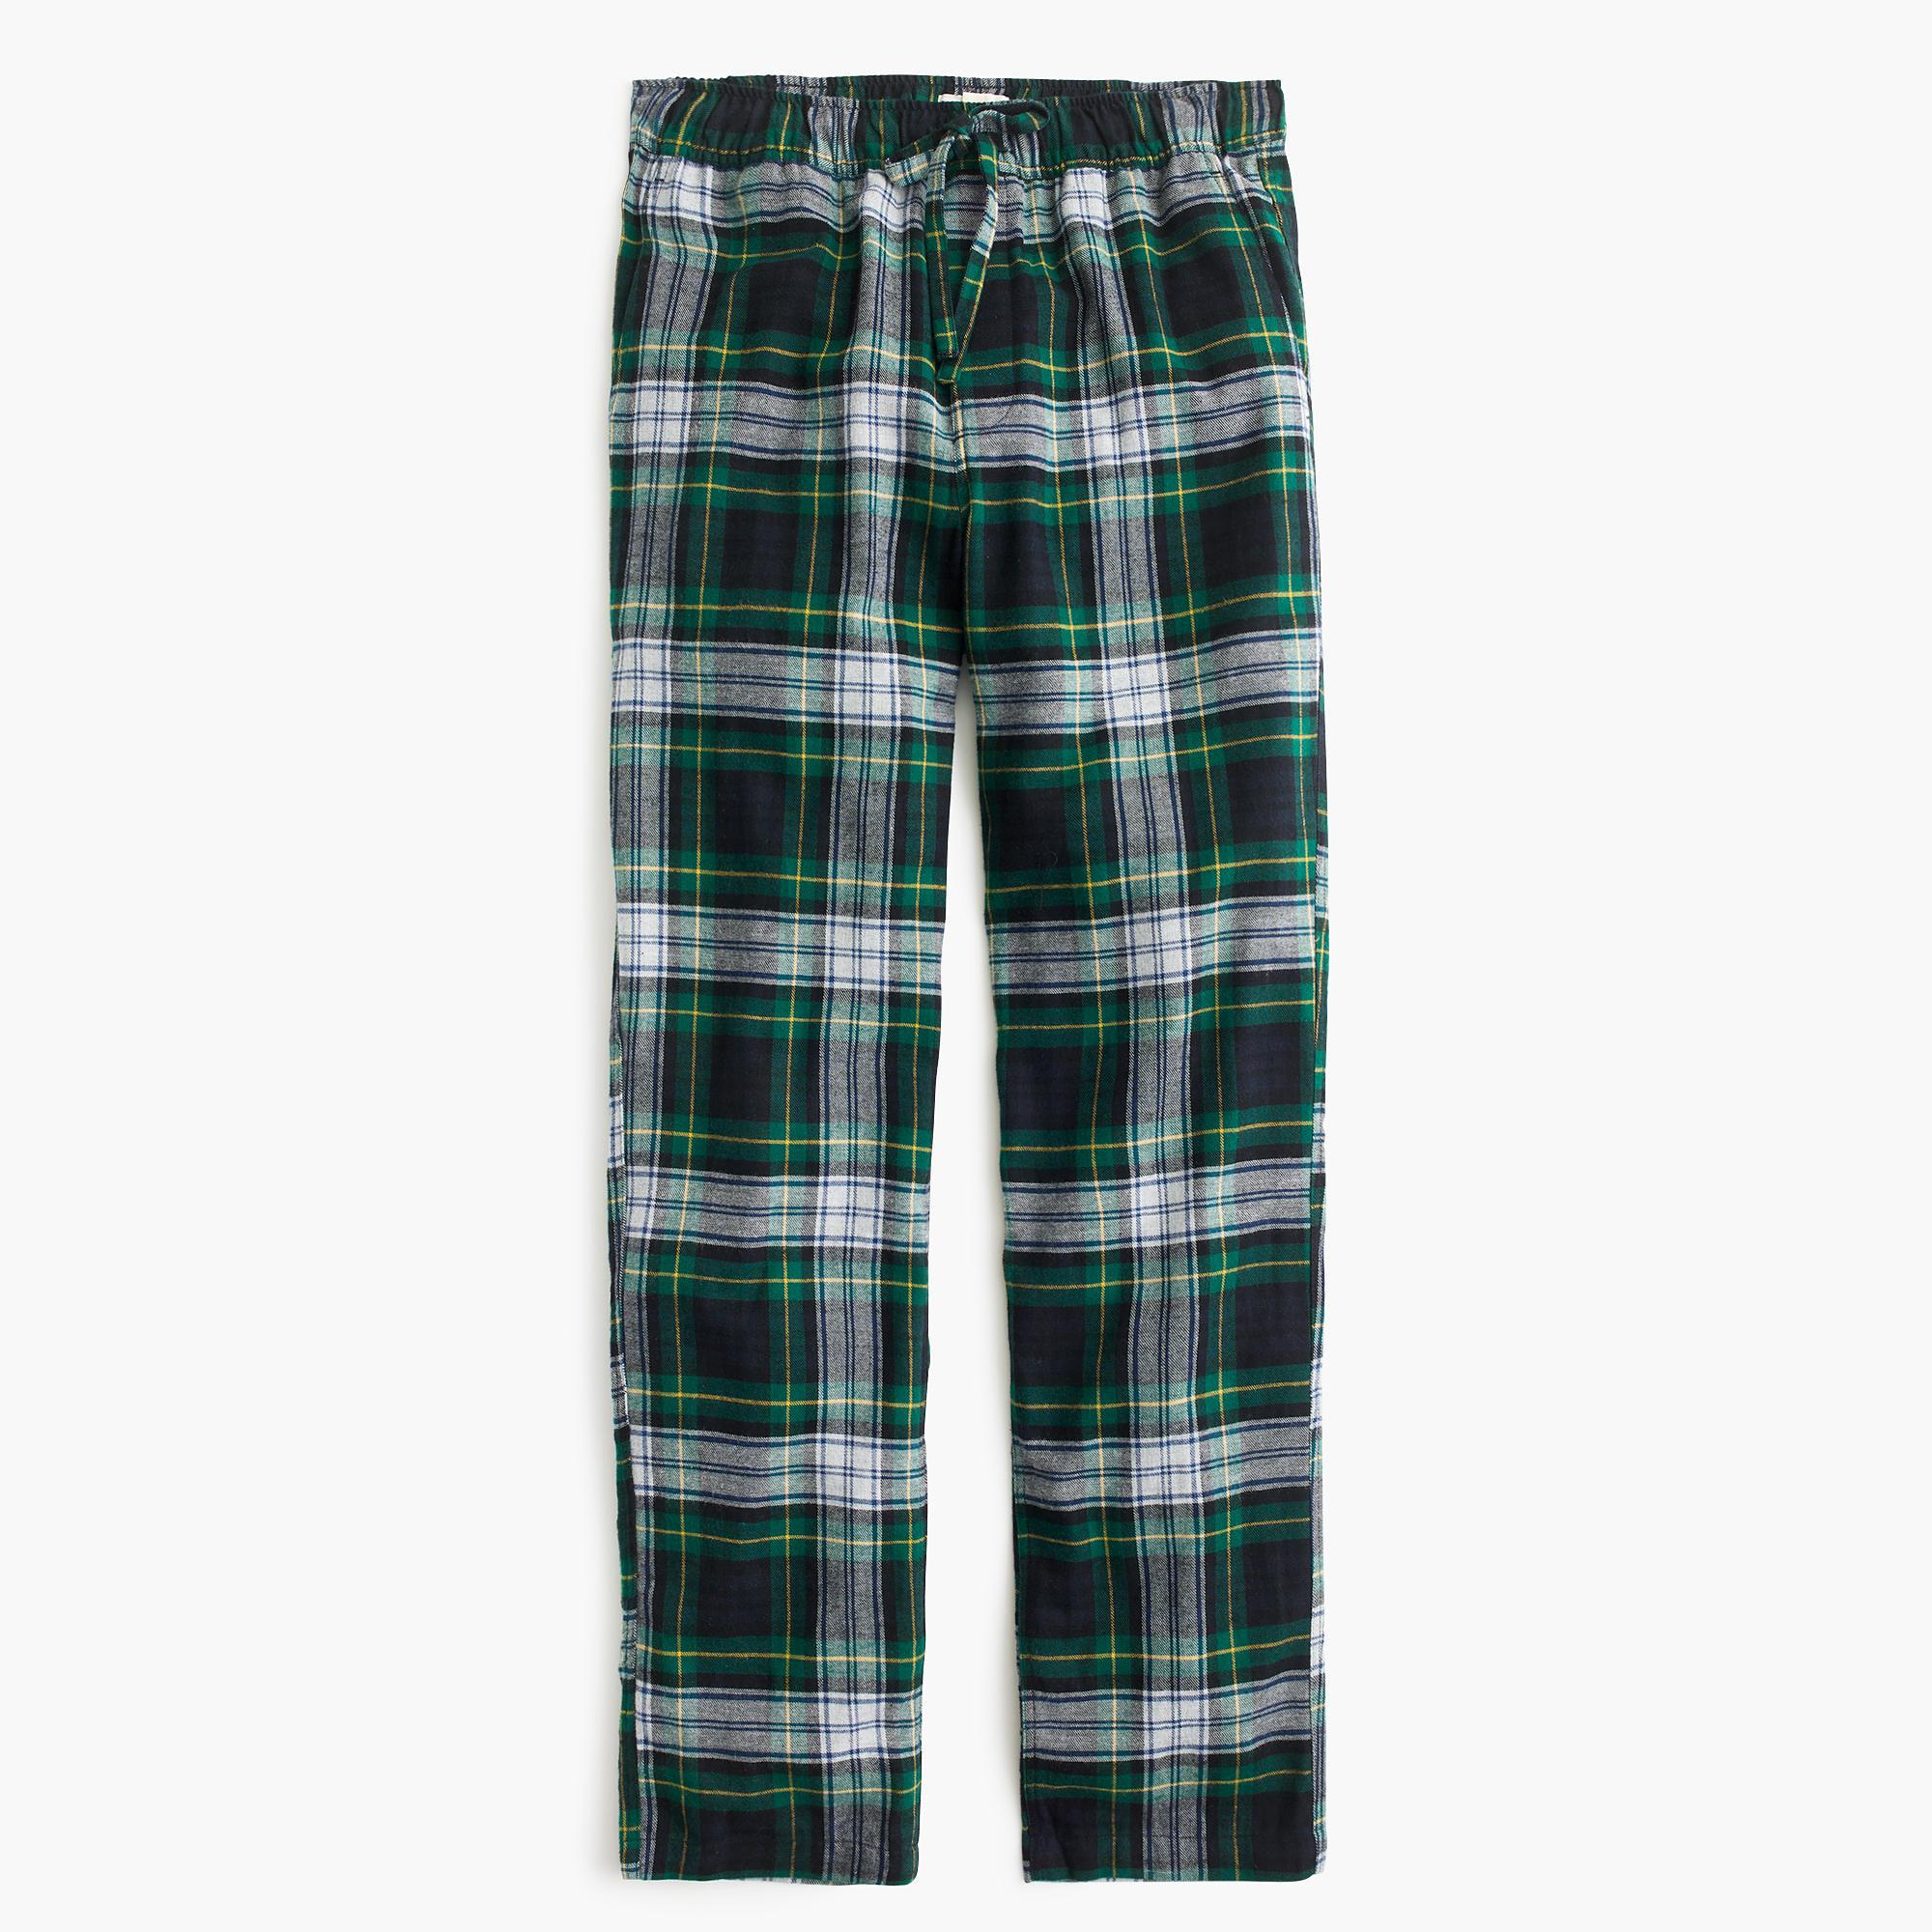 Lyst - J.Crew Pajama Set In Green Tartan in Green for Men